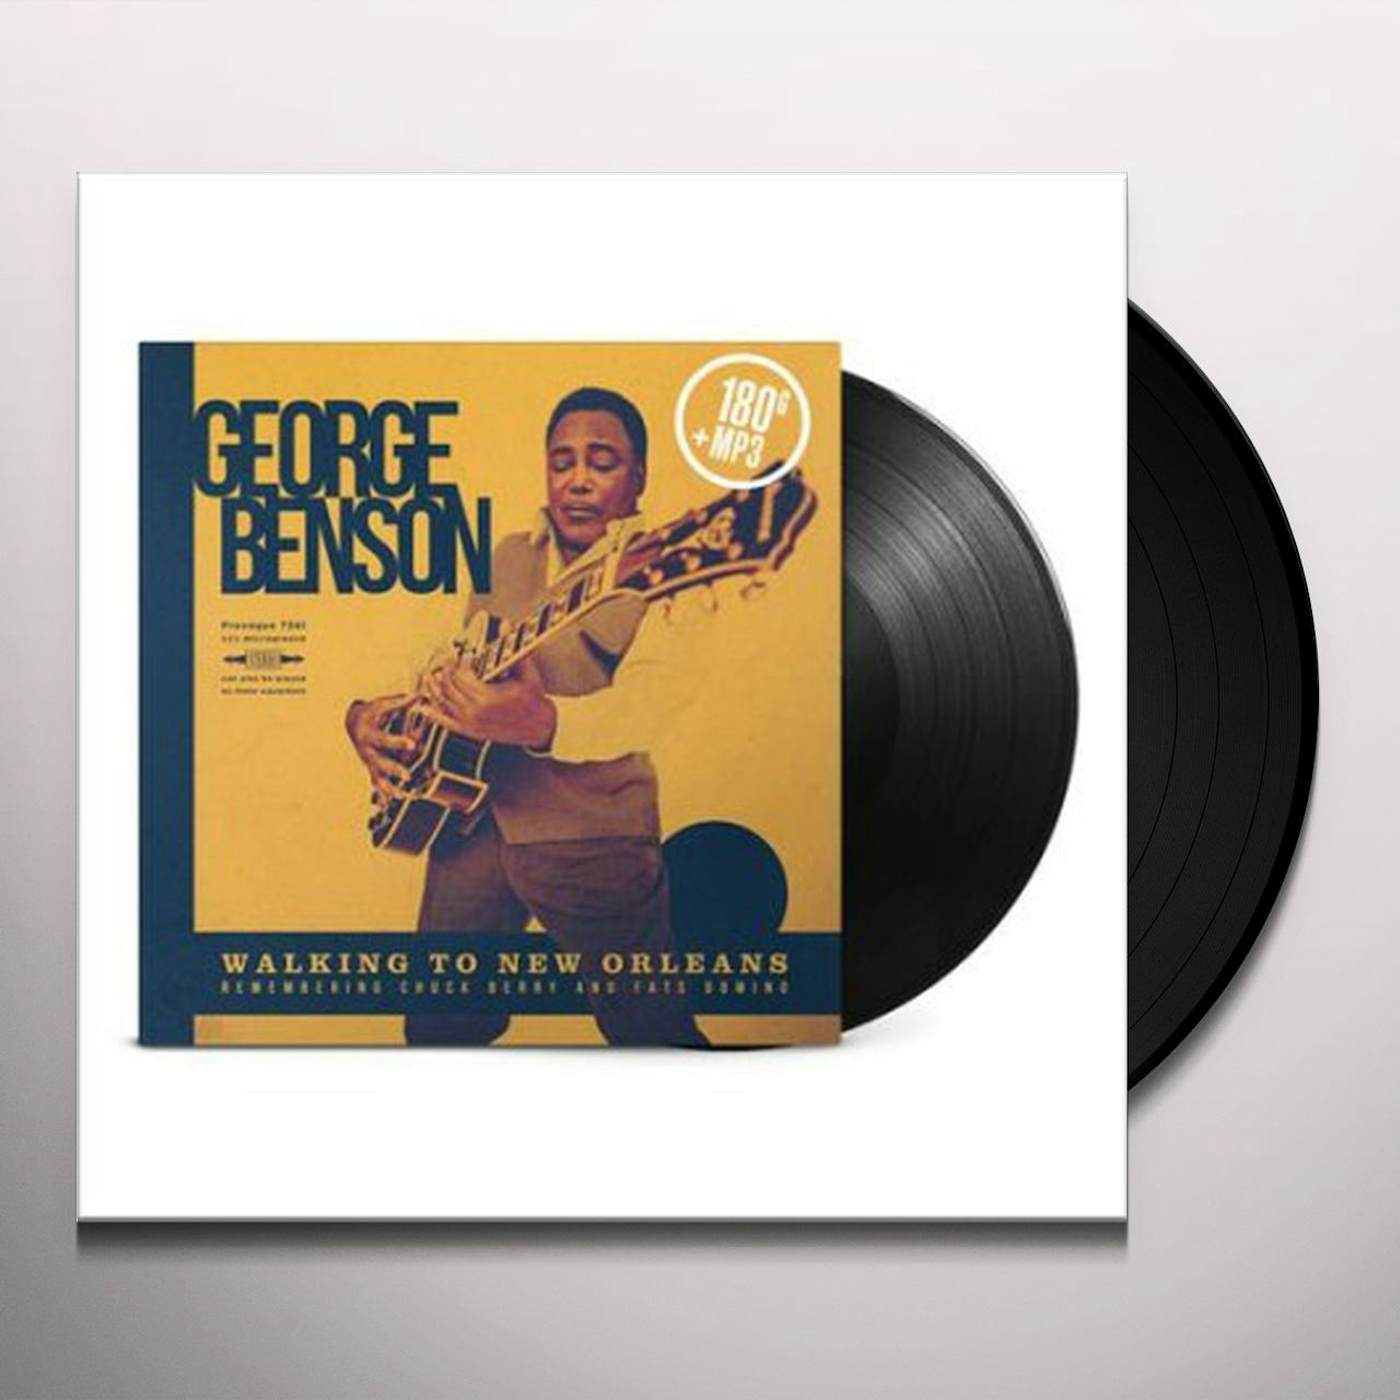 George Benson Walking To New Orleans Vinyl Record